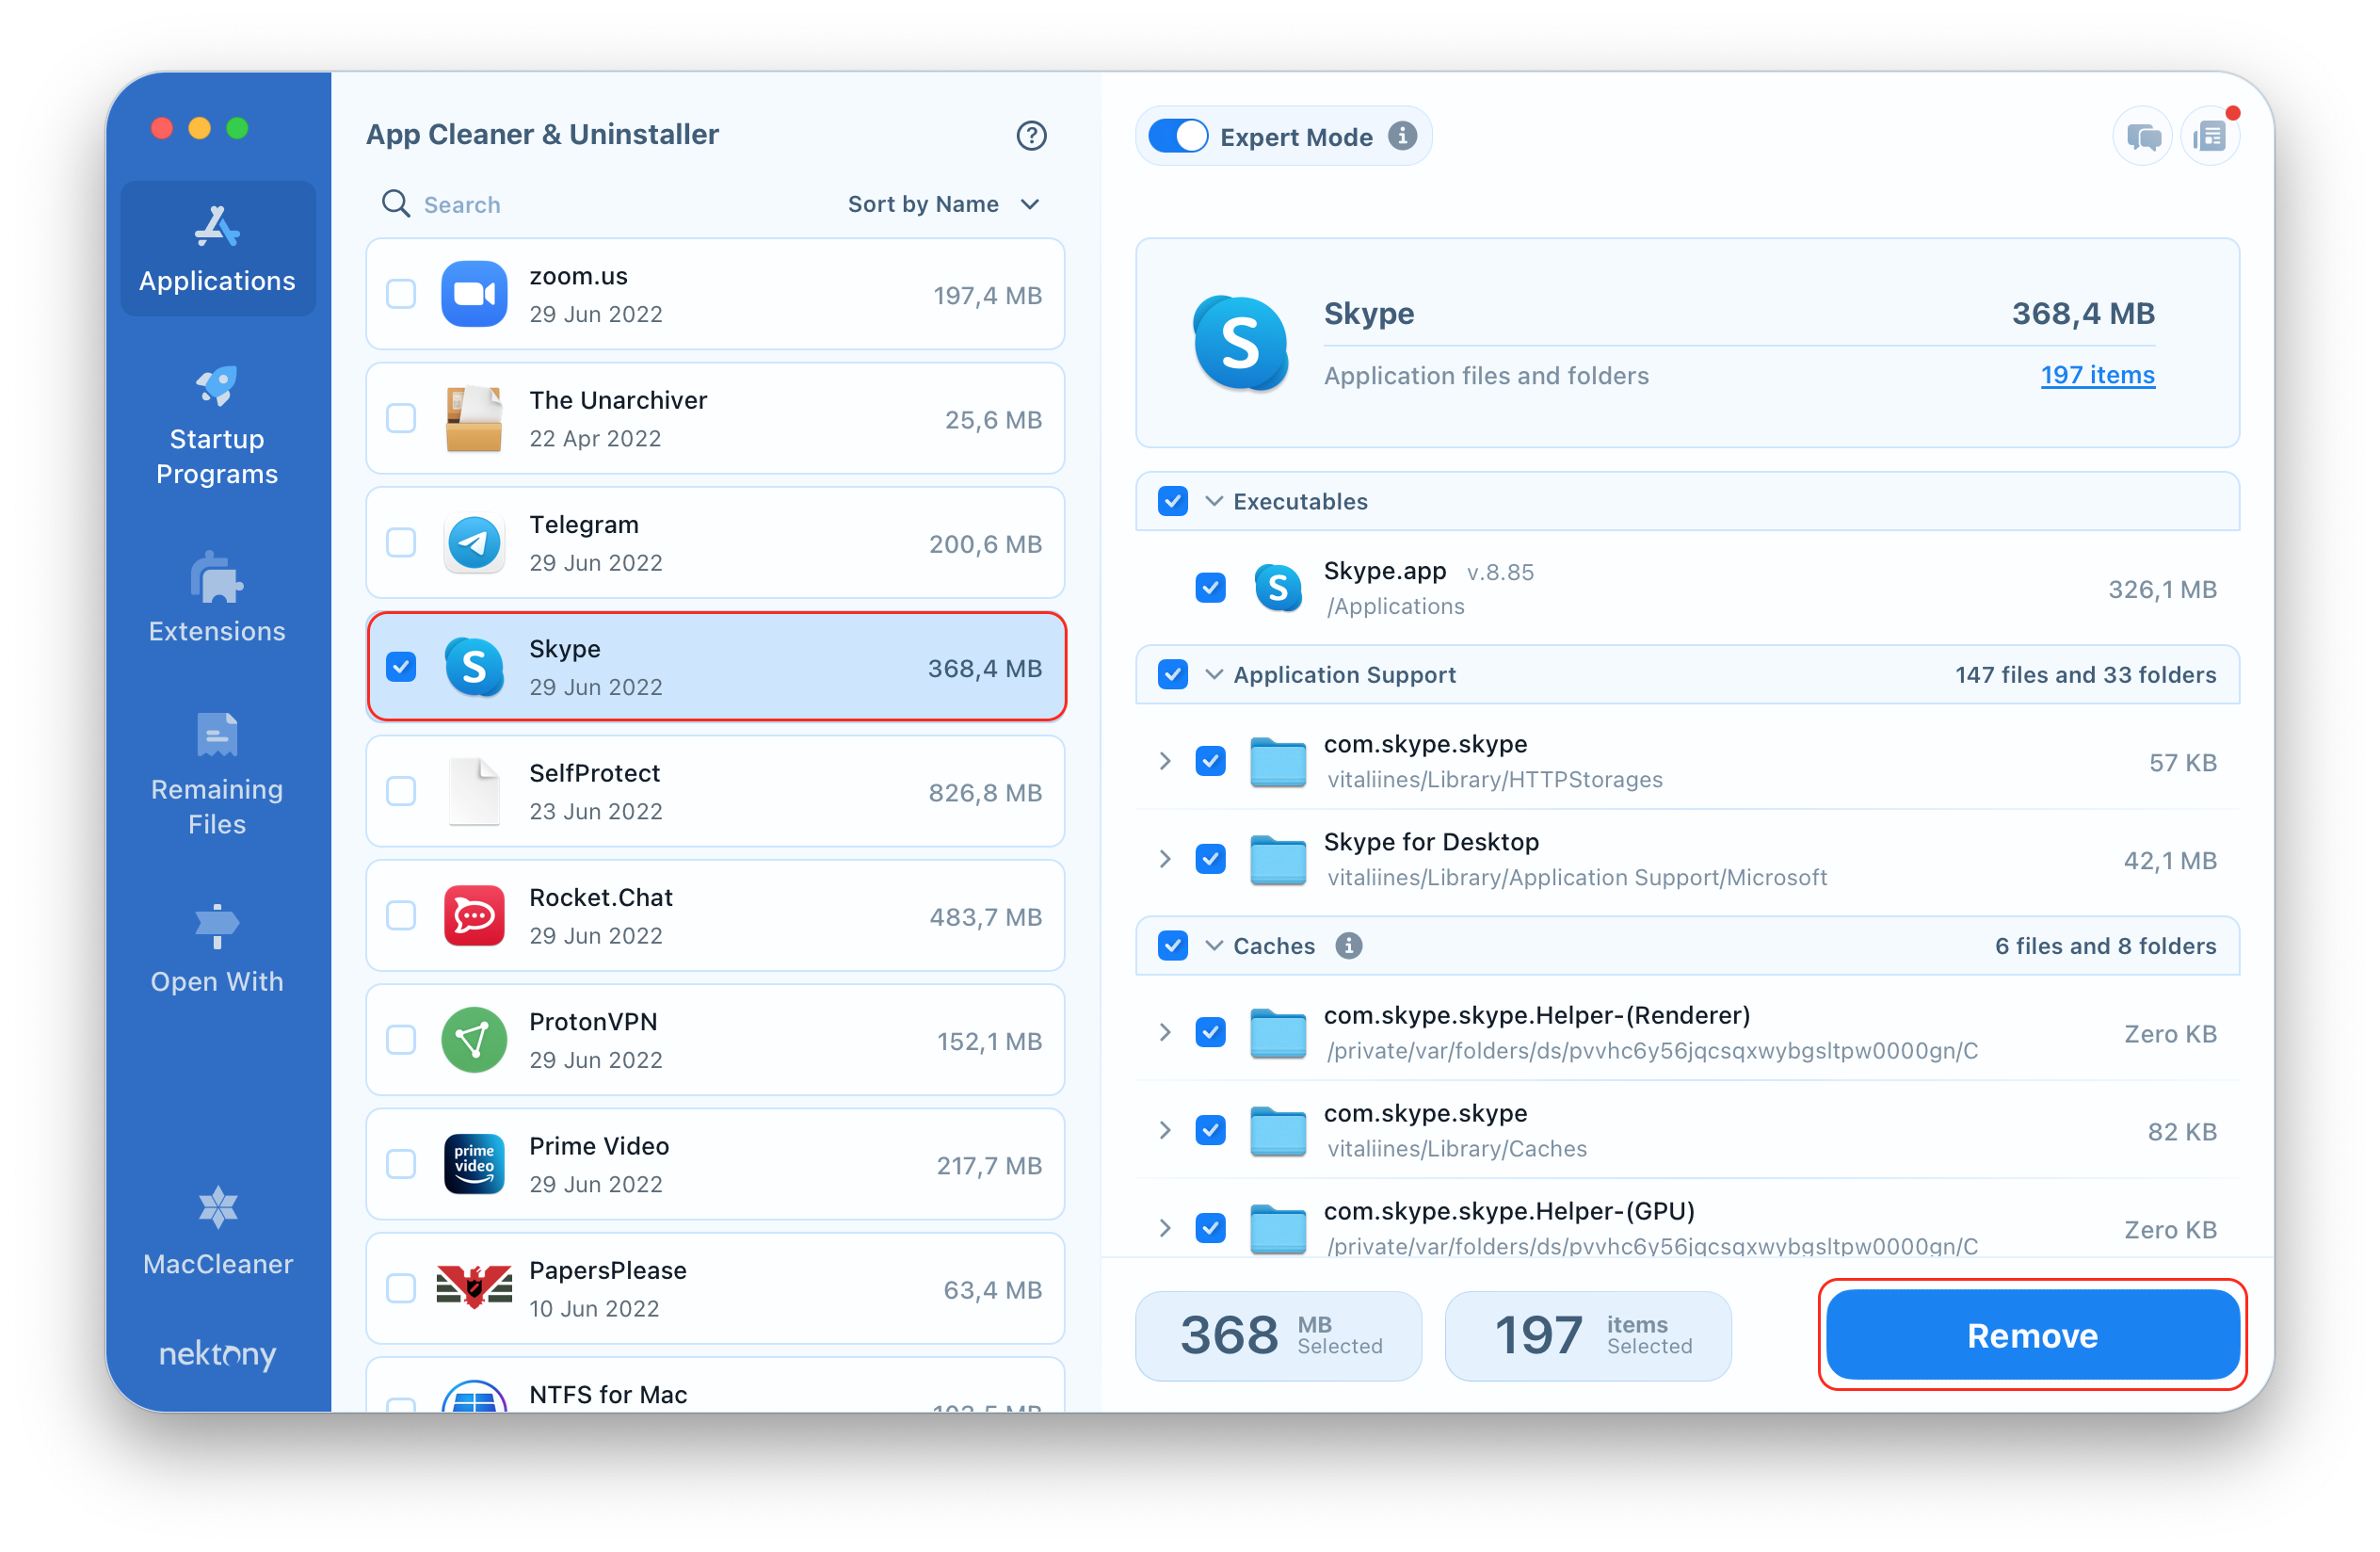 App Cleaner & Uninstaller showing Skype